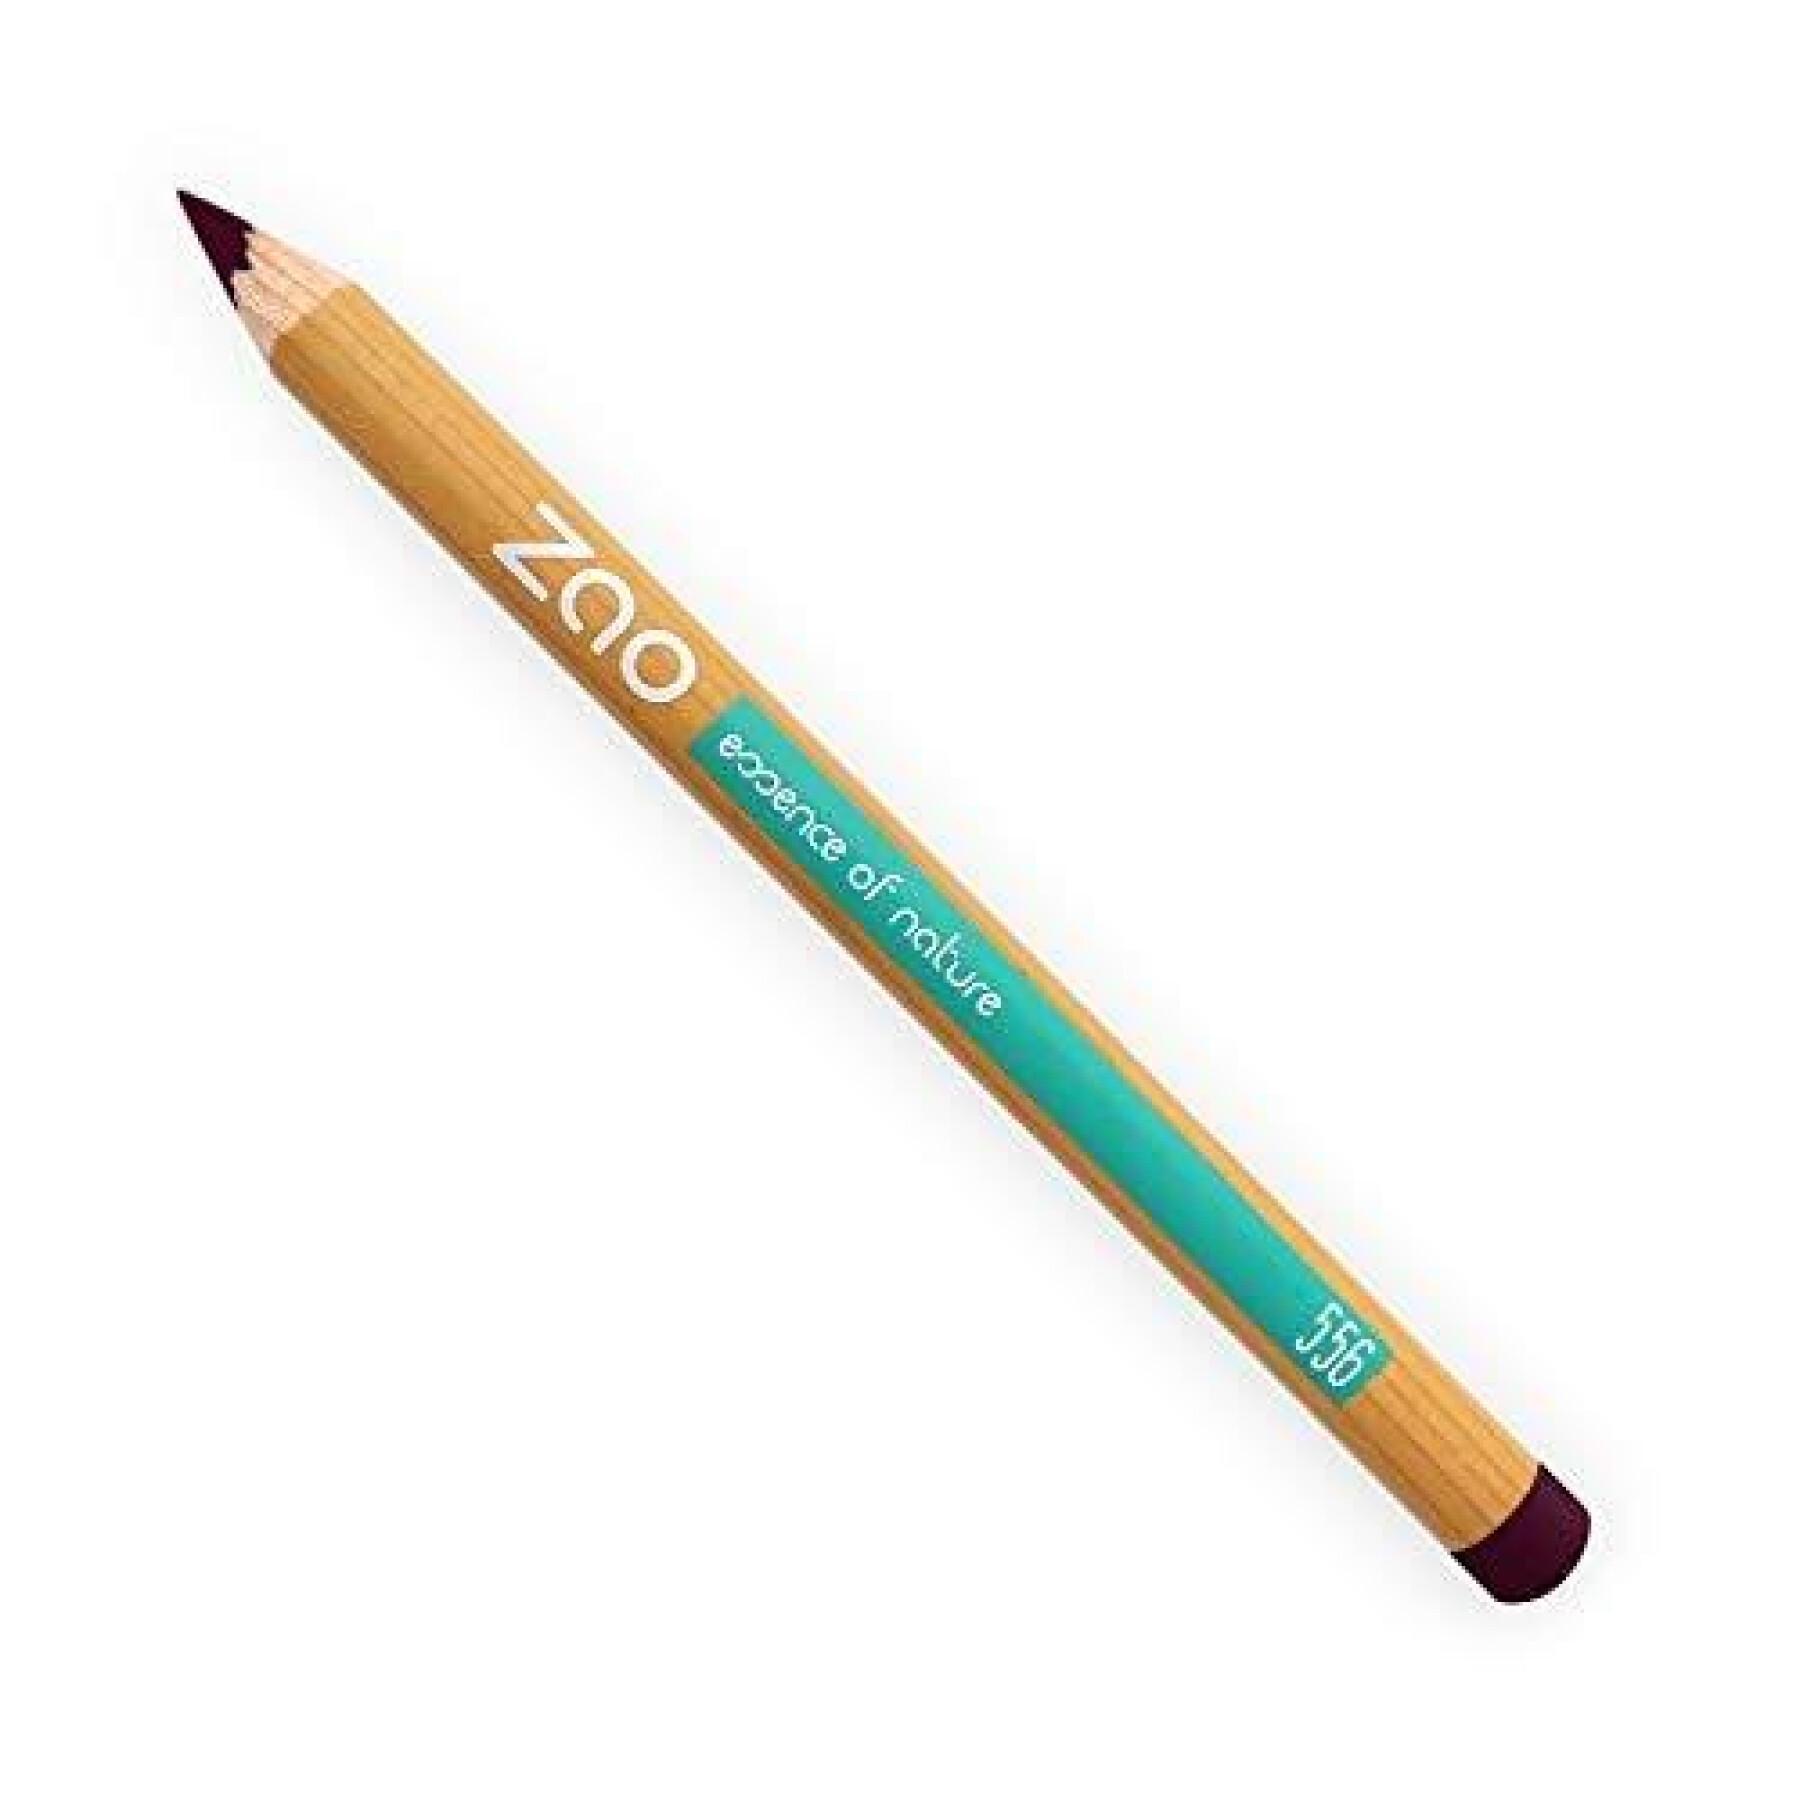 Multipurpose pencil 556 plum woman Zao